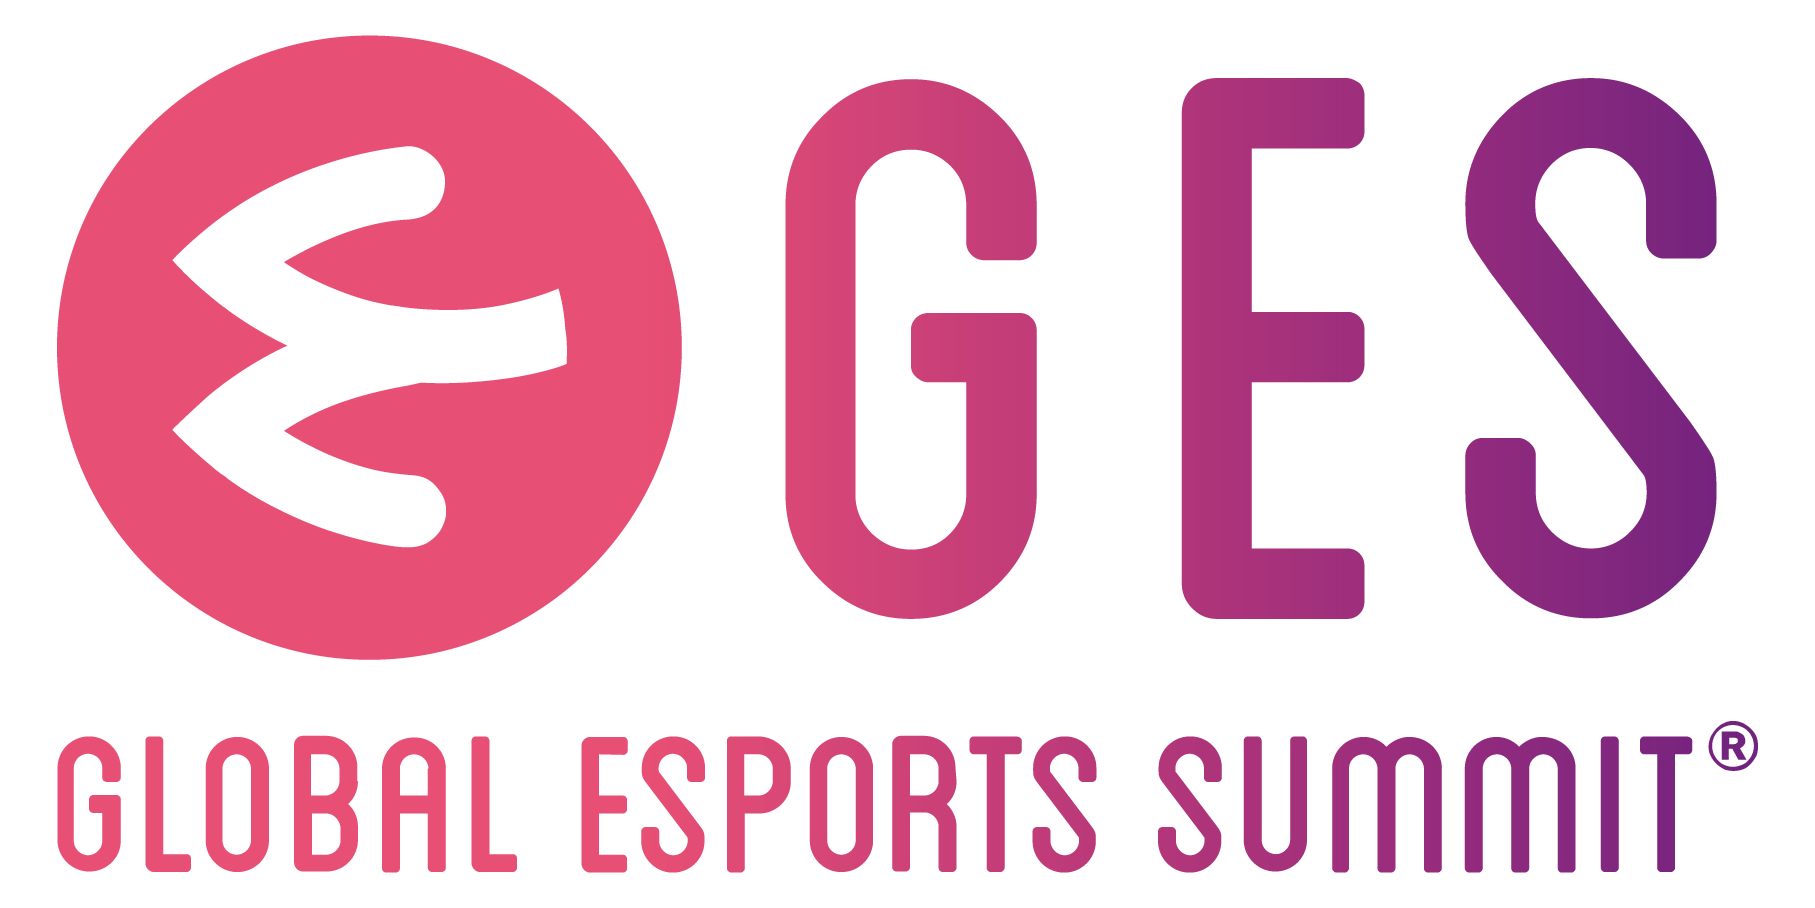 Global Esport Summit